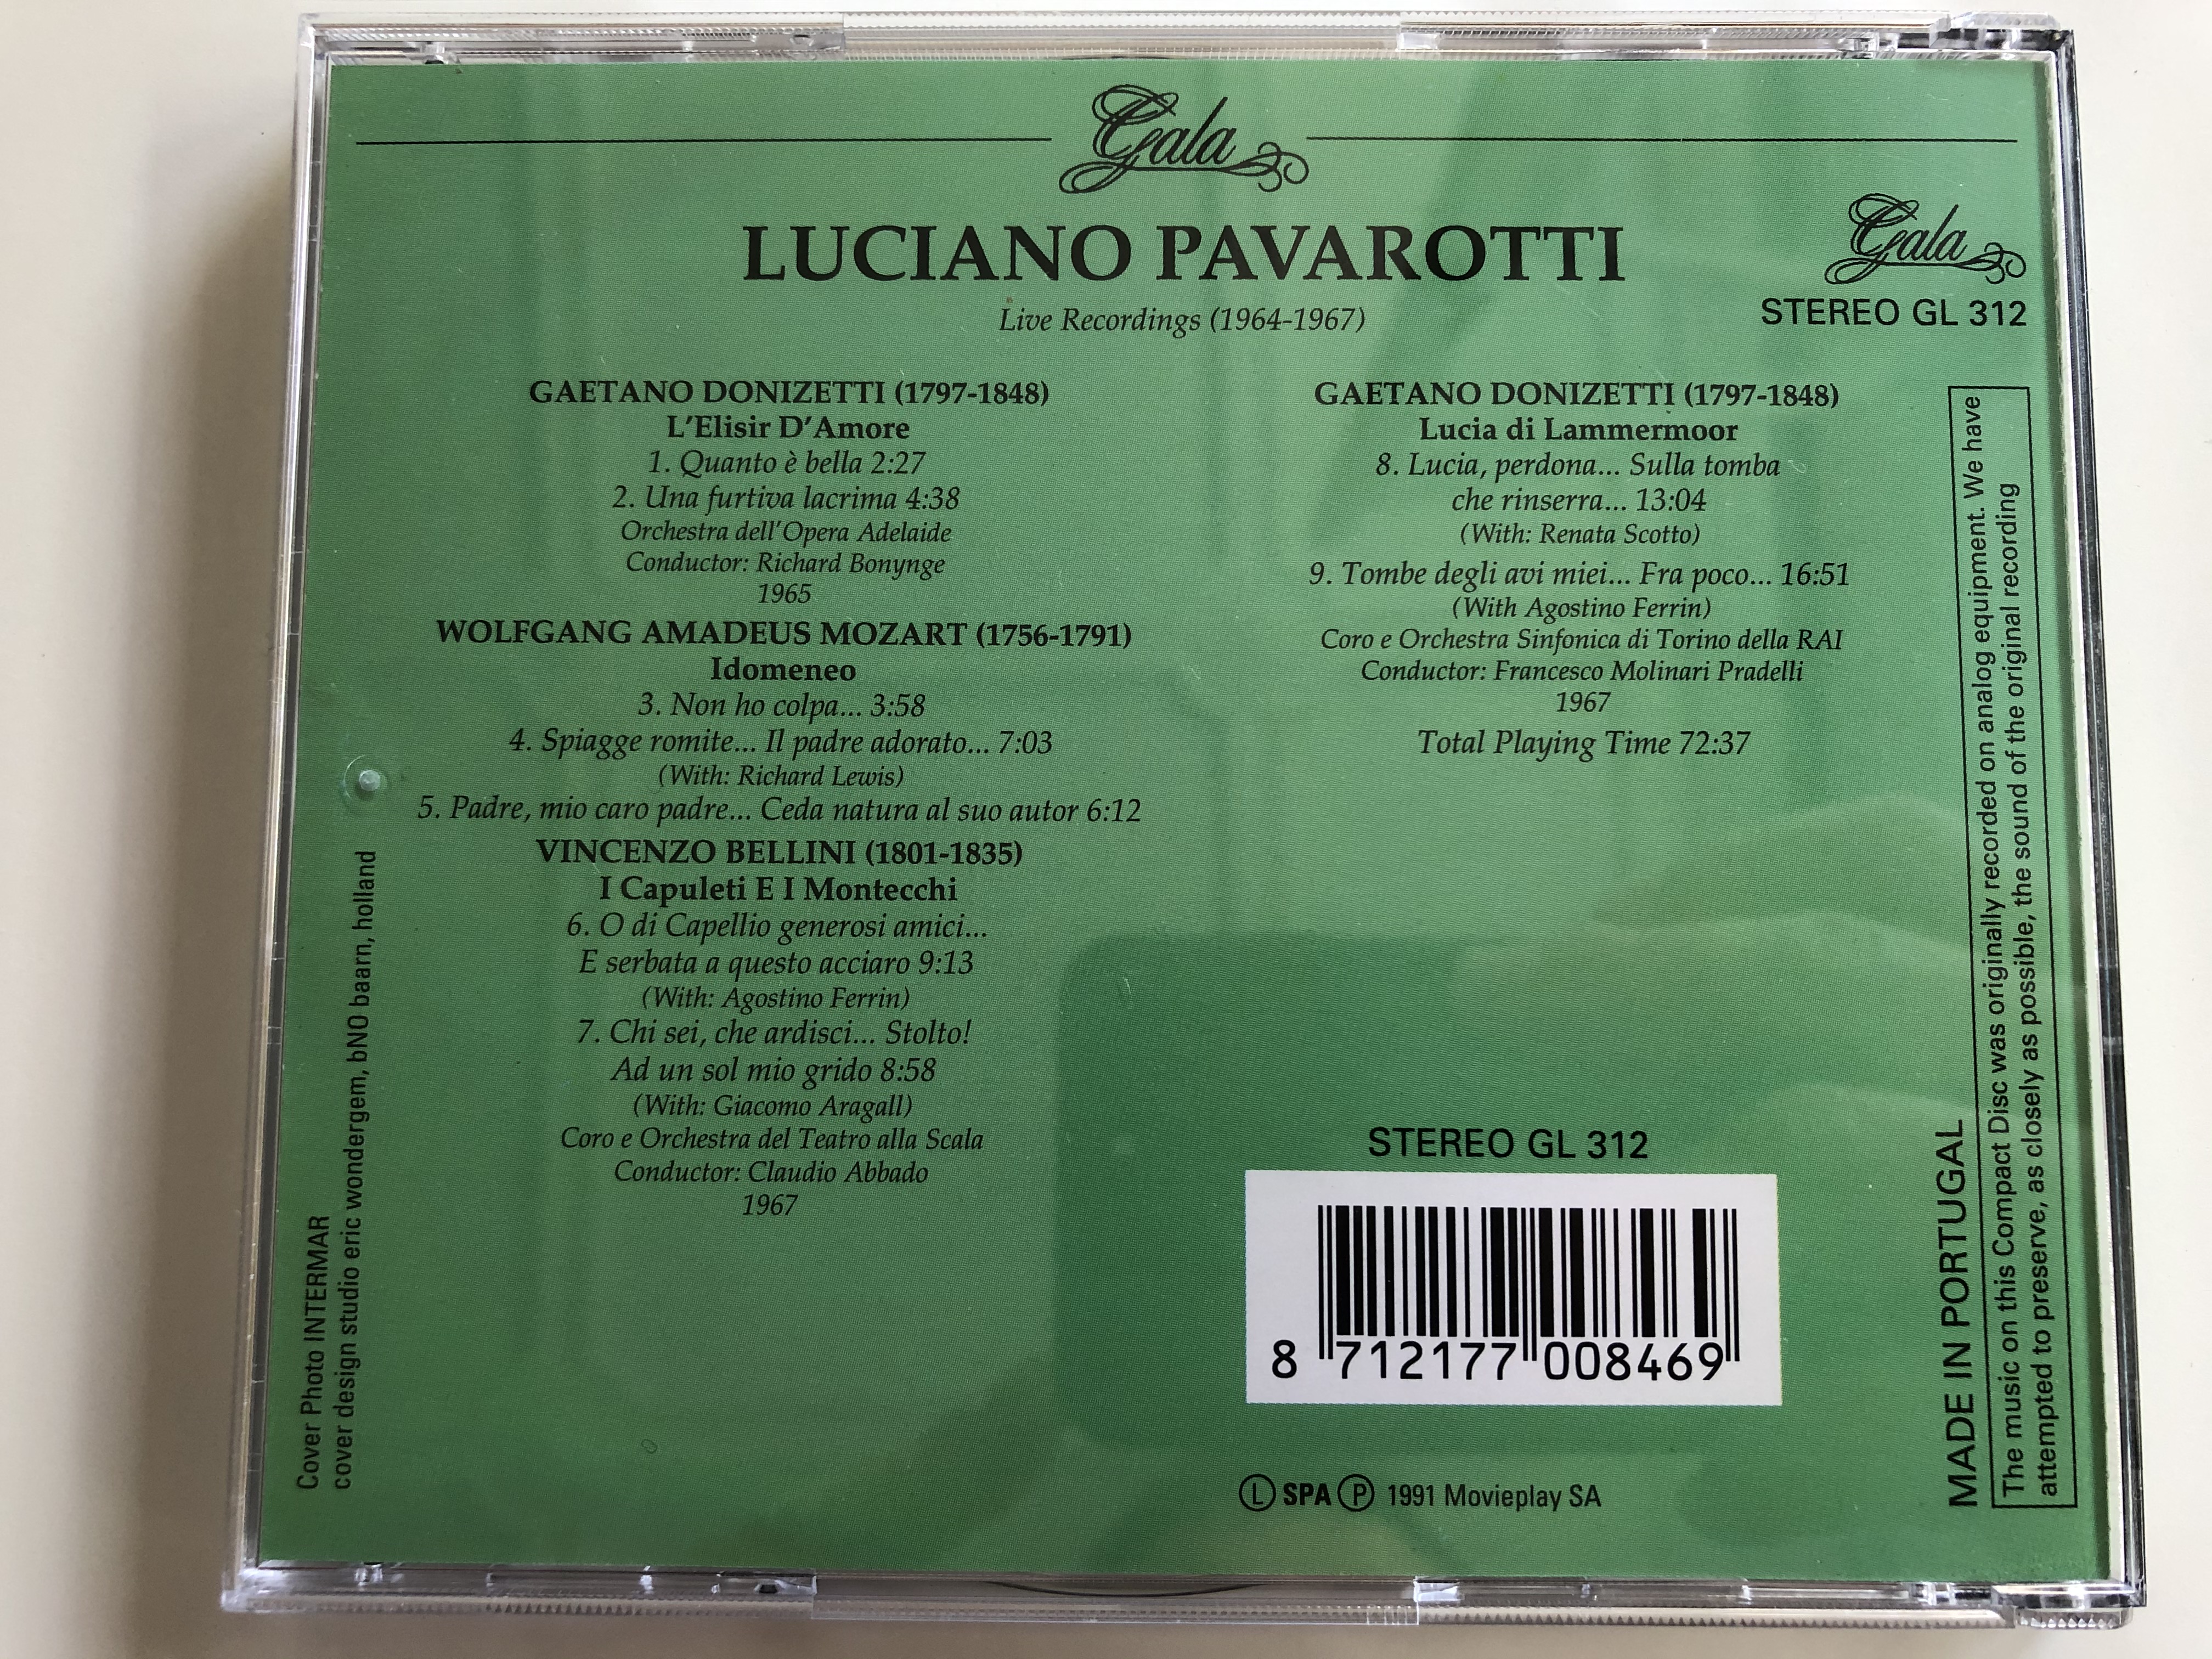 luciano-pavarotti-live-recordings-1964-1967-70-minutes-gala-audio-cd-1991-stereo-gl-312-5-.jpg